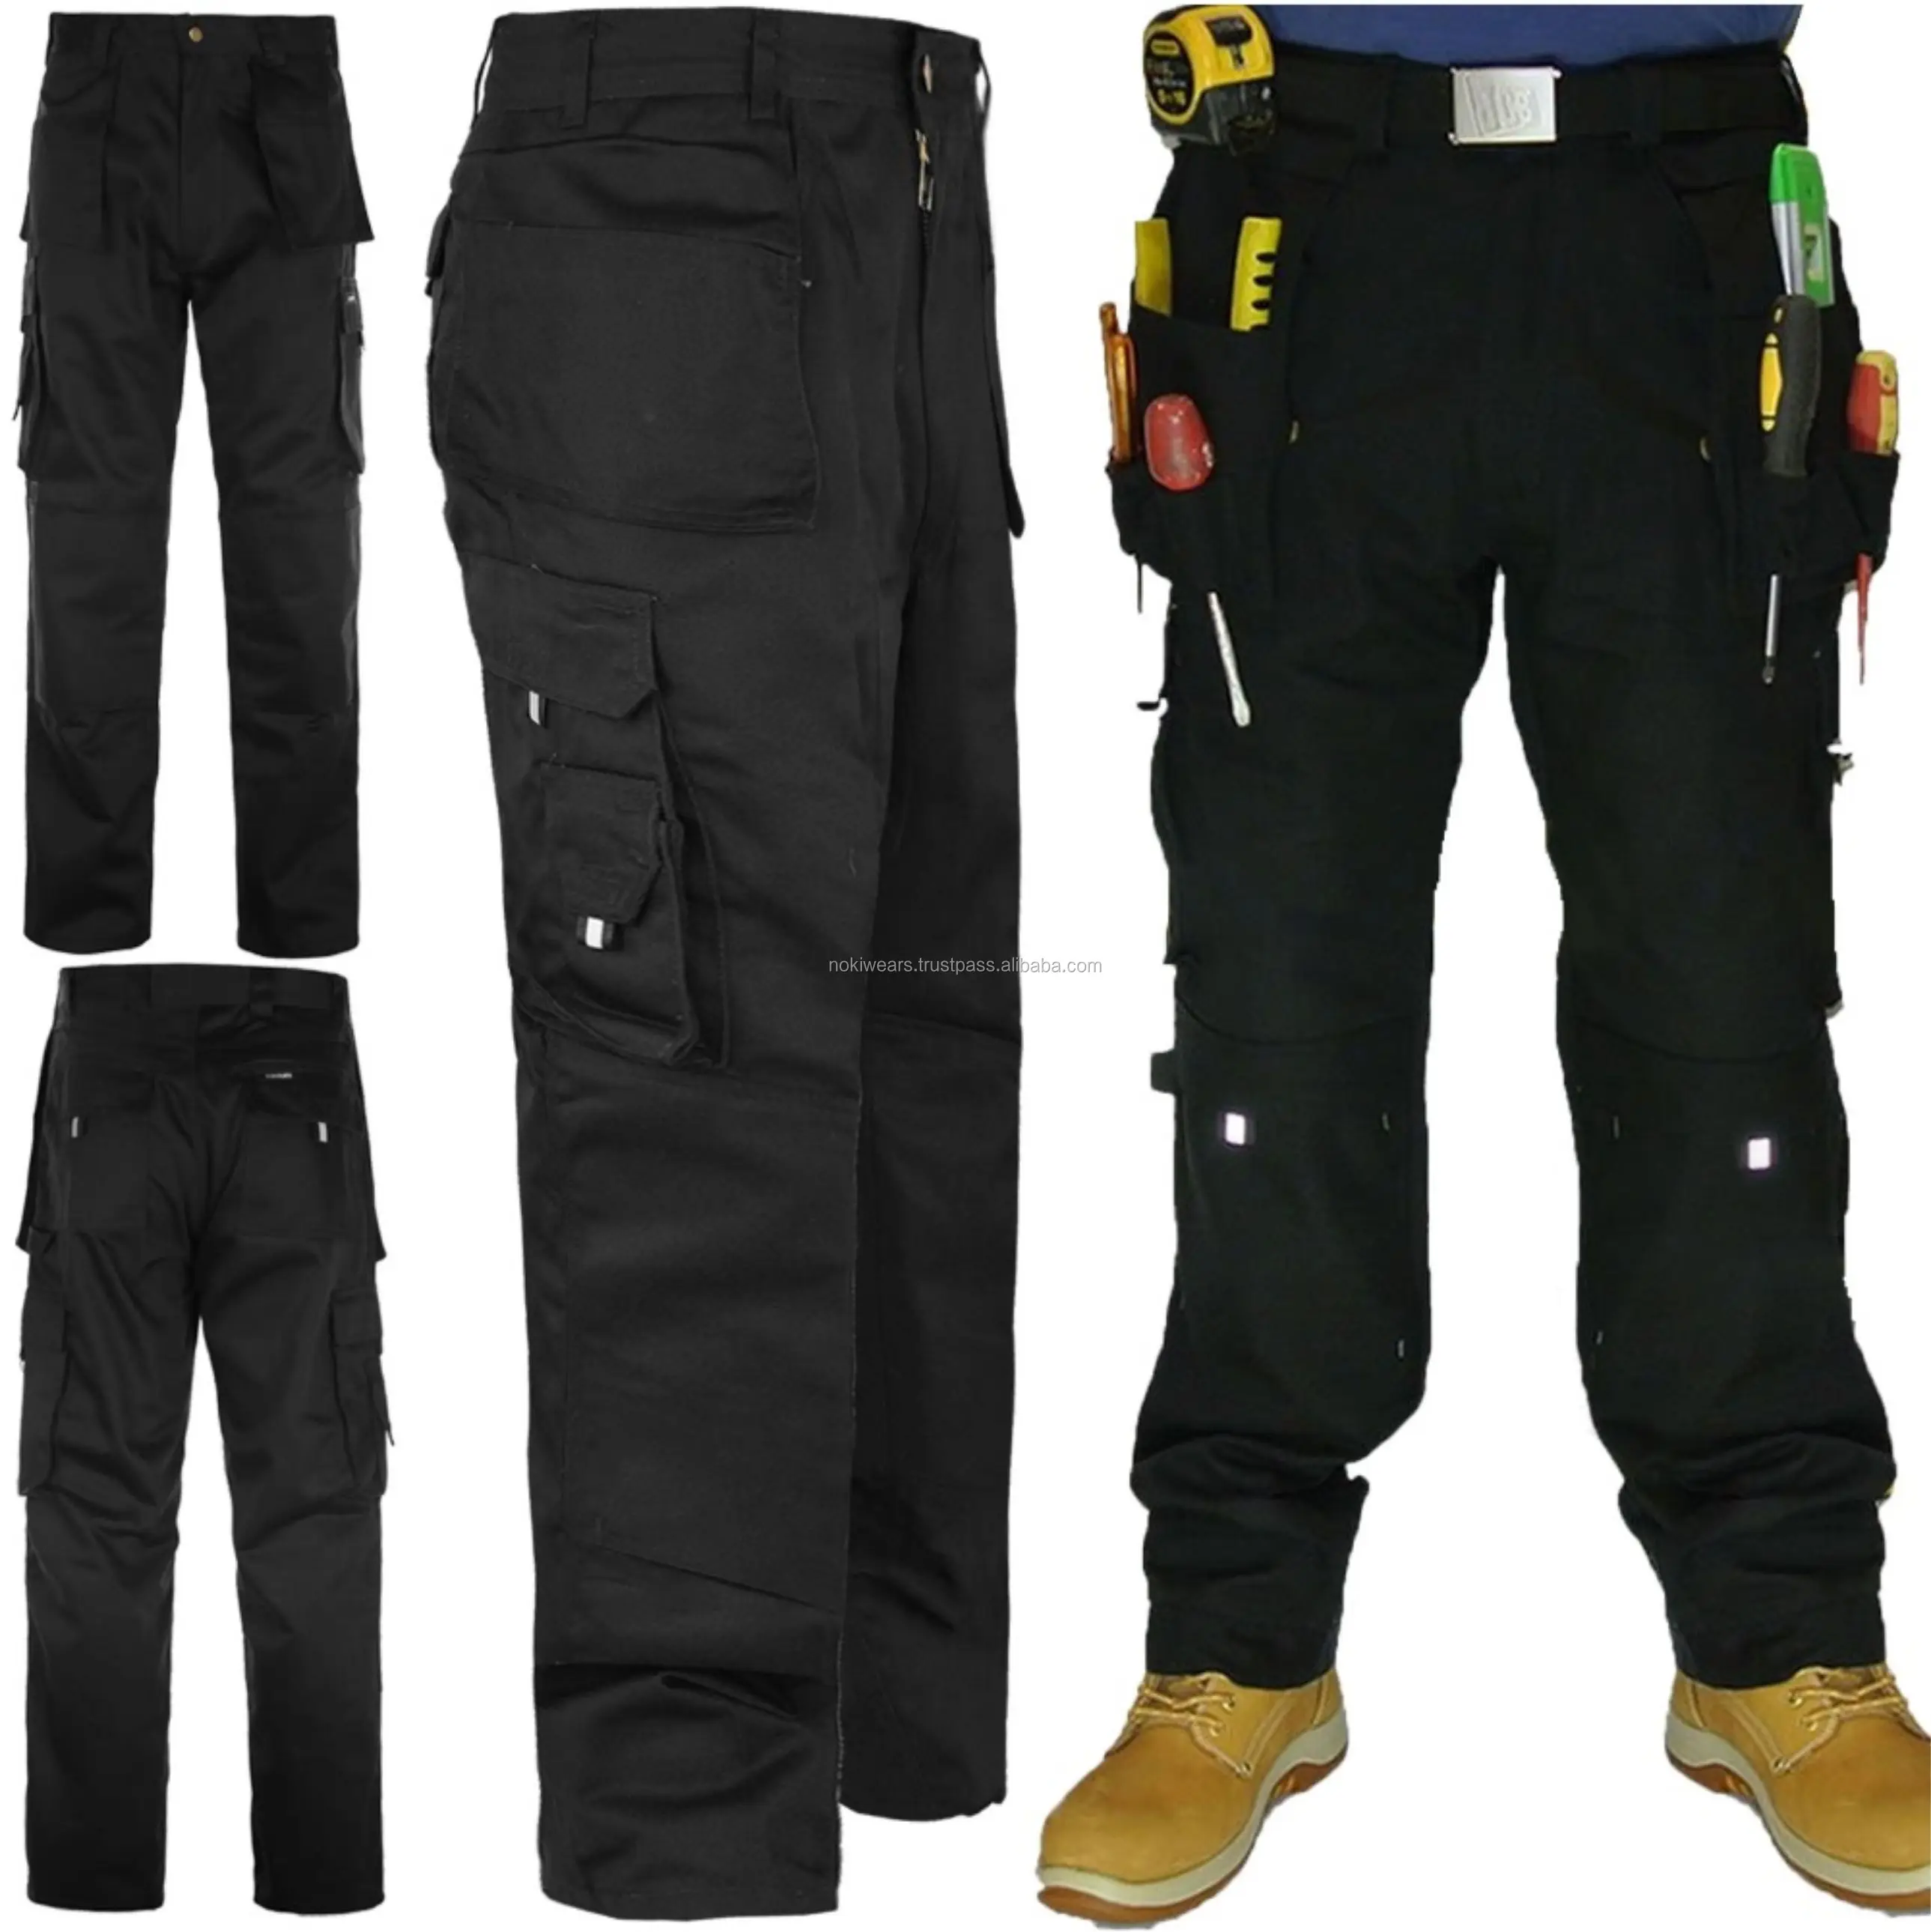 New Mens Work Trousers Combat 6 Pockets Heavy Duty Cargo Knee Pad Pro Trade Kit 